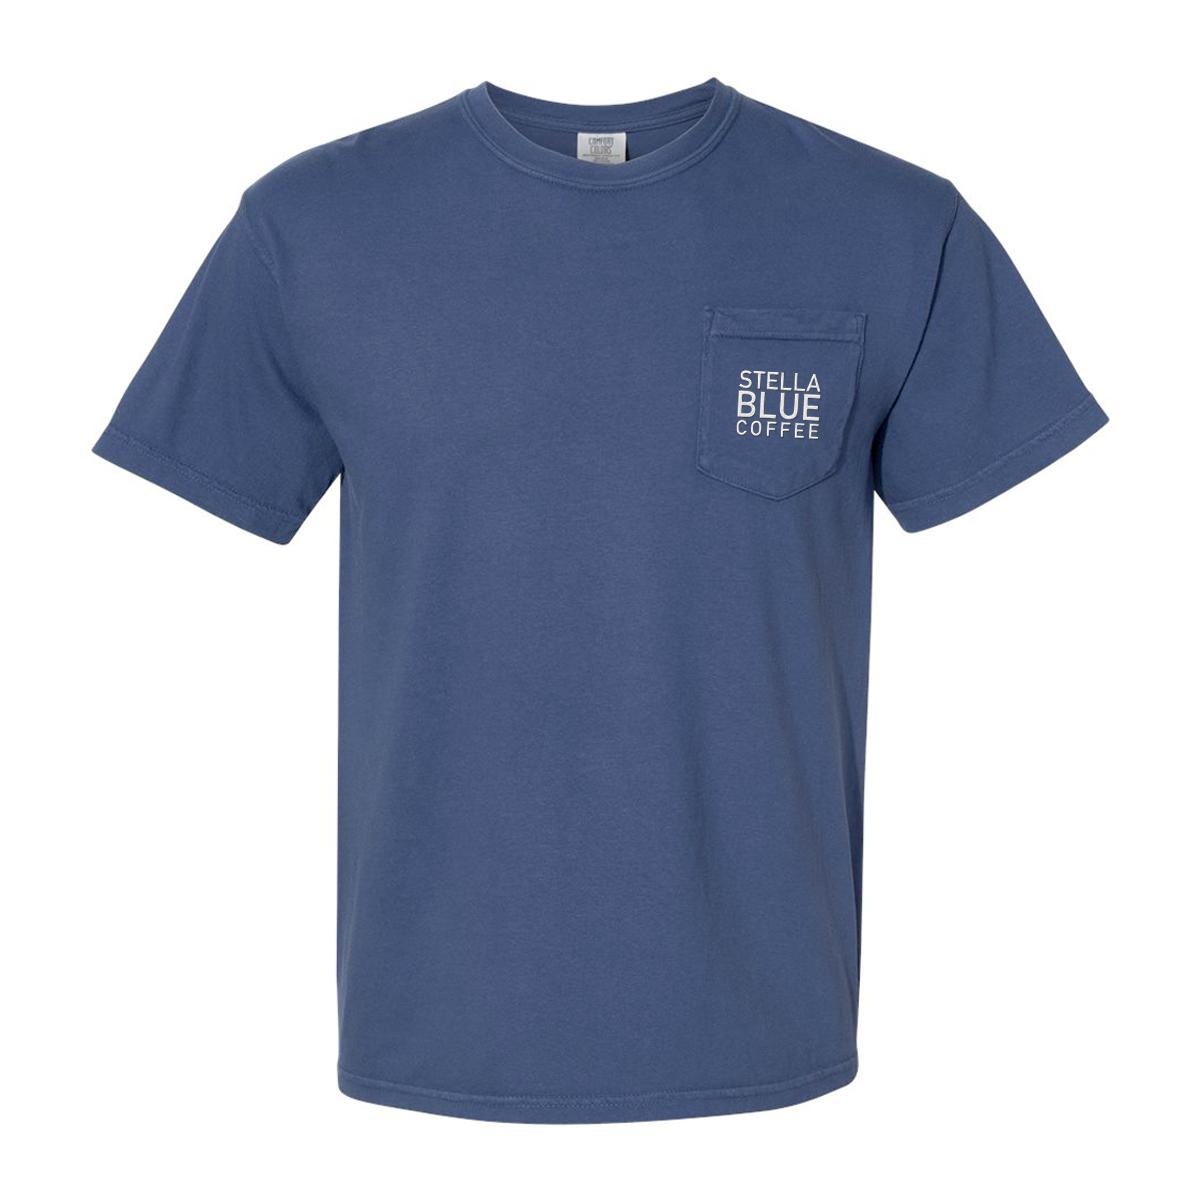 Stella Blue Pocket Tee-T-Shirts-Stella Blue Coffee-Navy-S-Barstool Sports